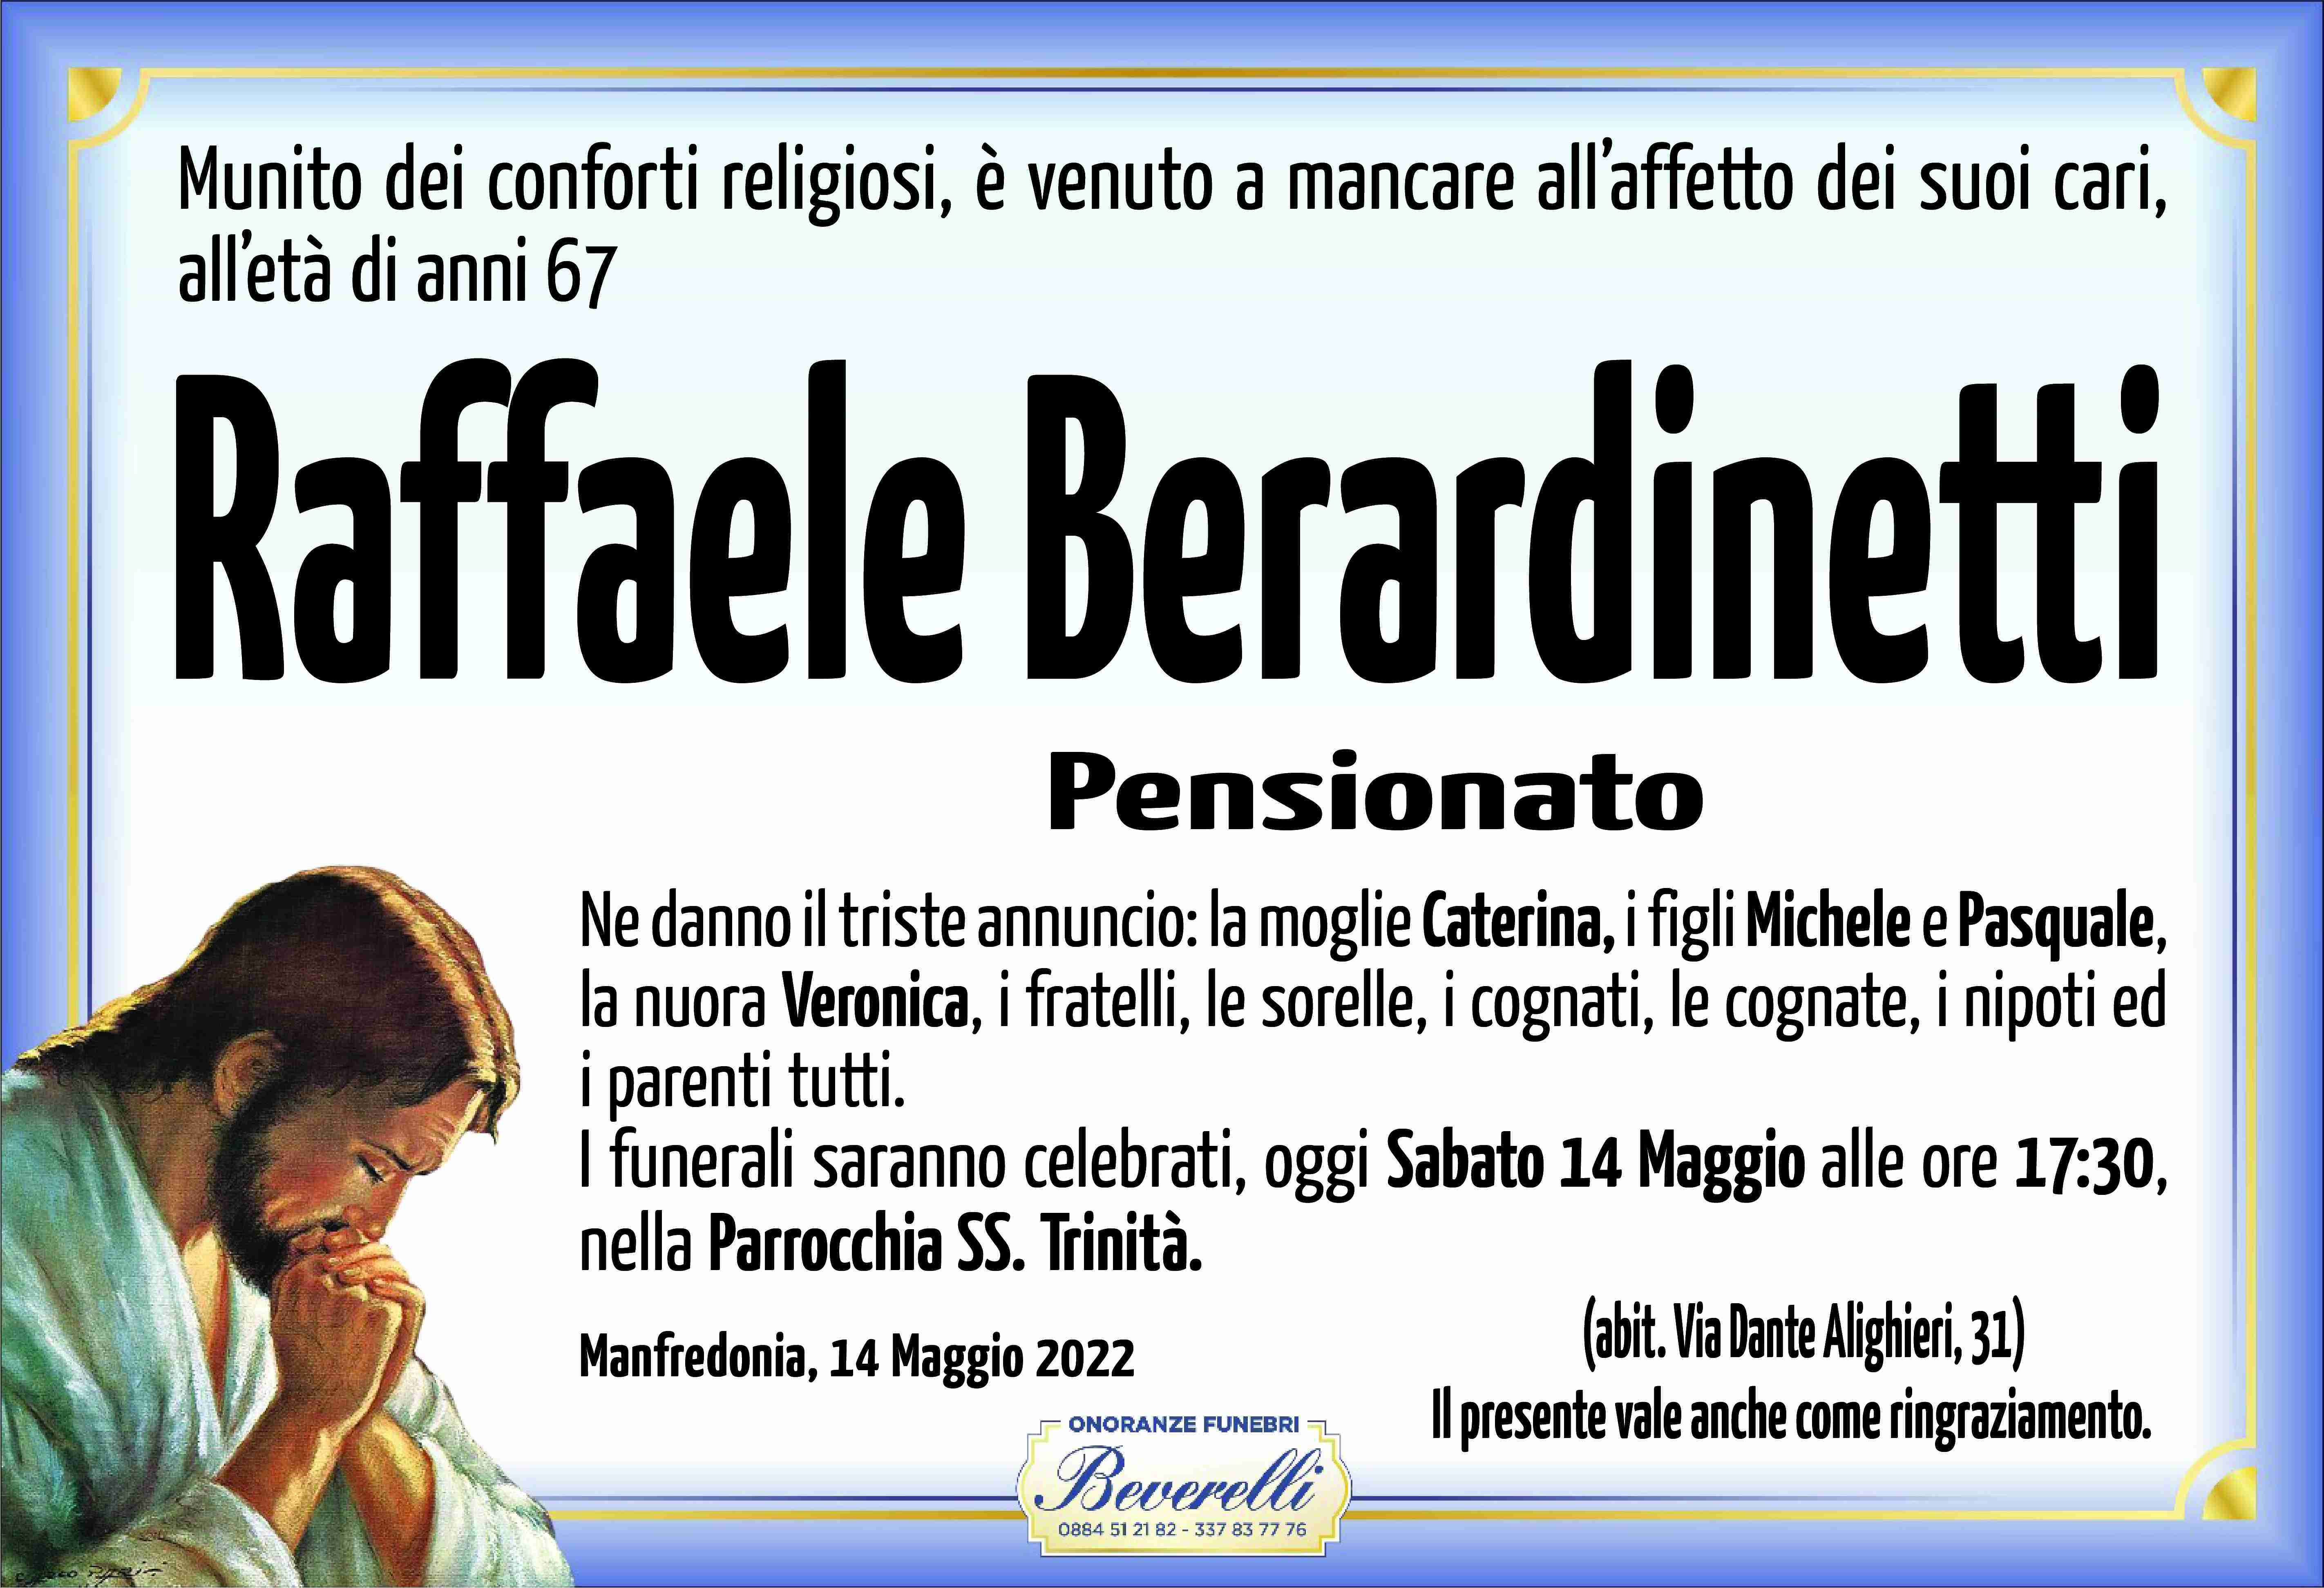 Raffaele Berardinetti